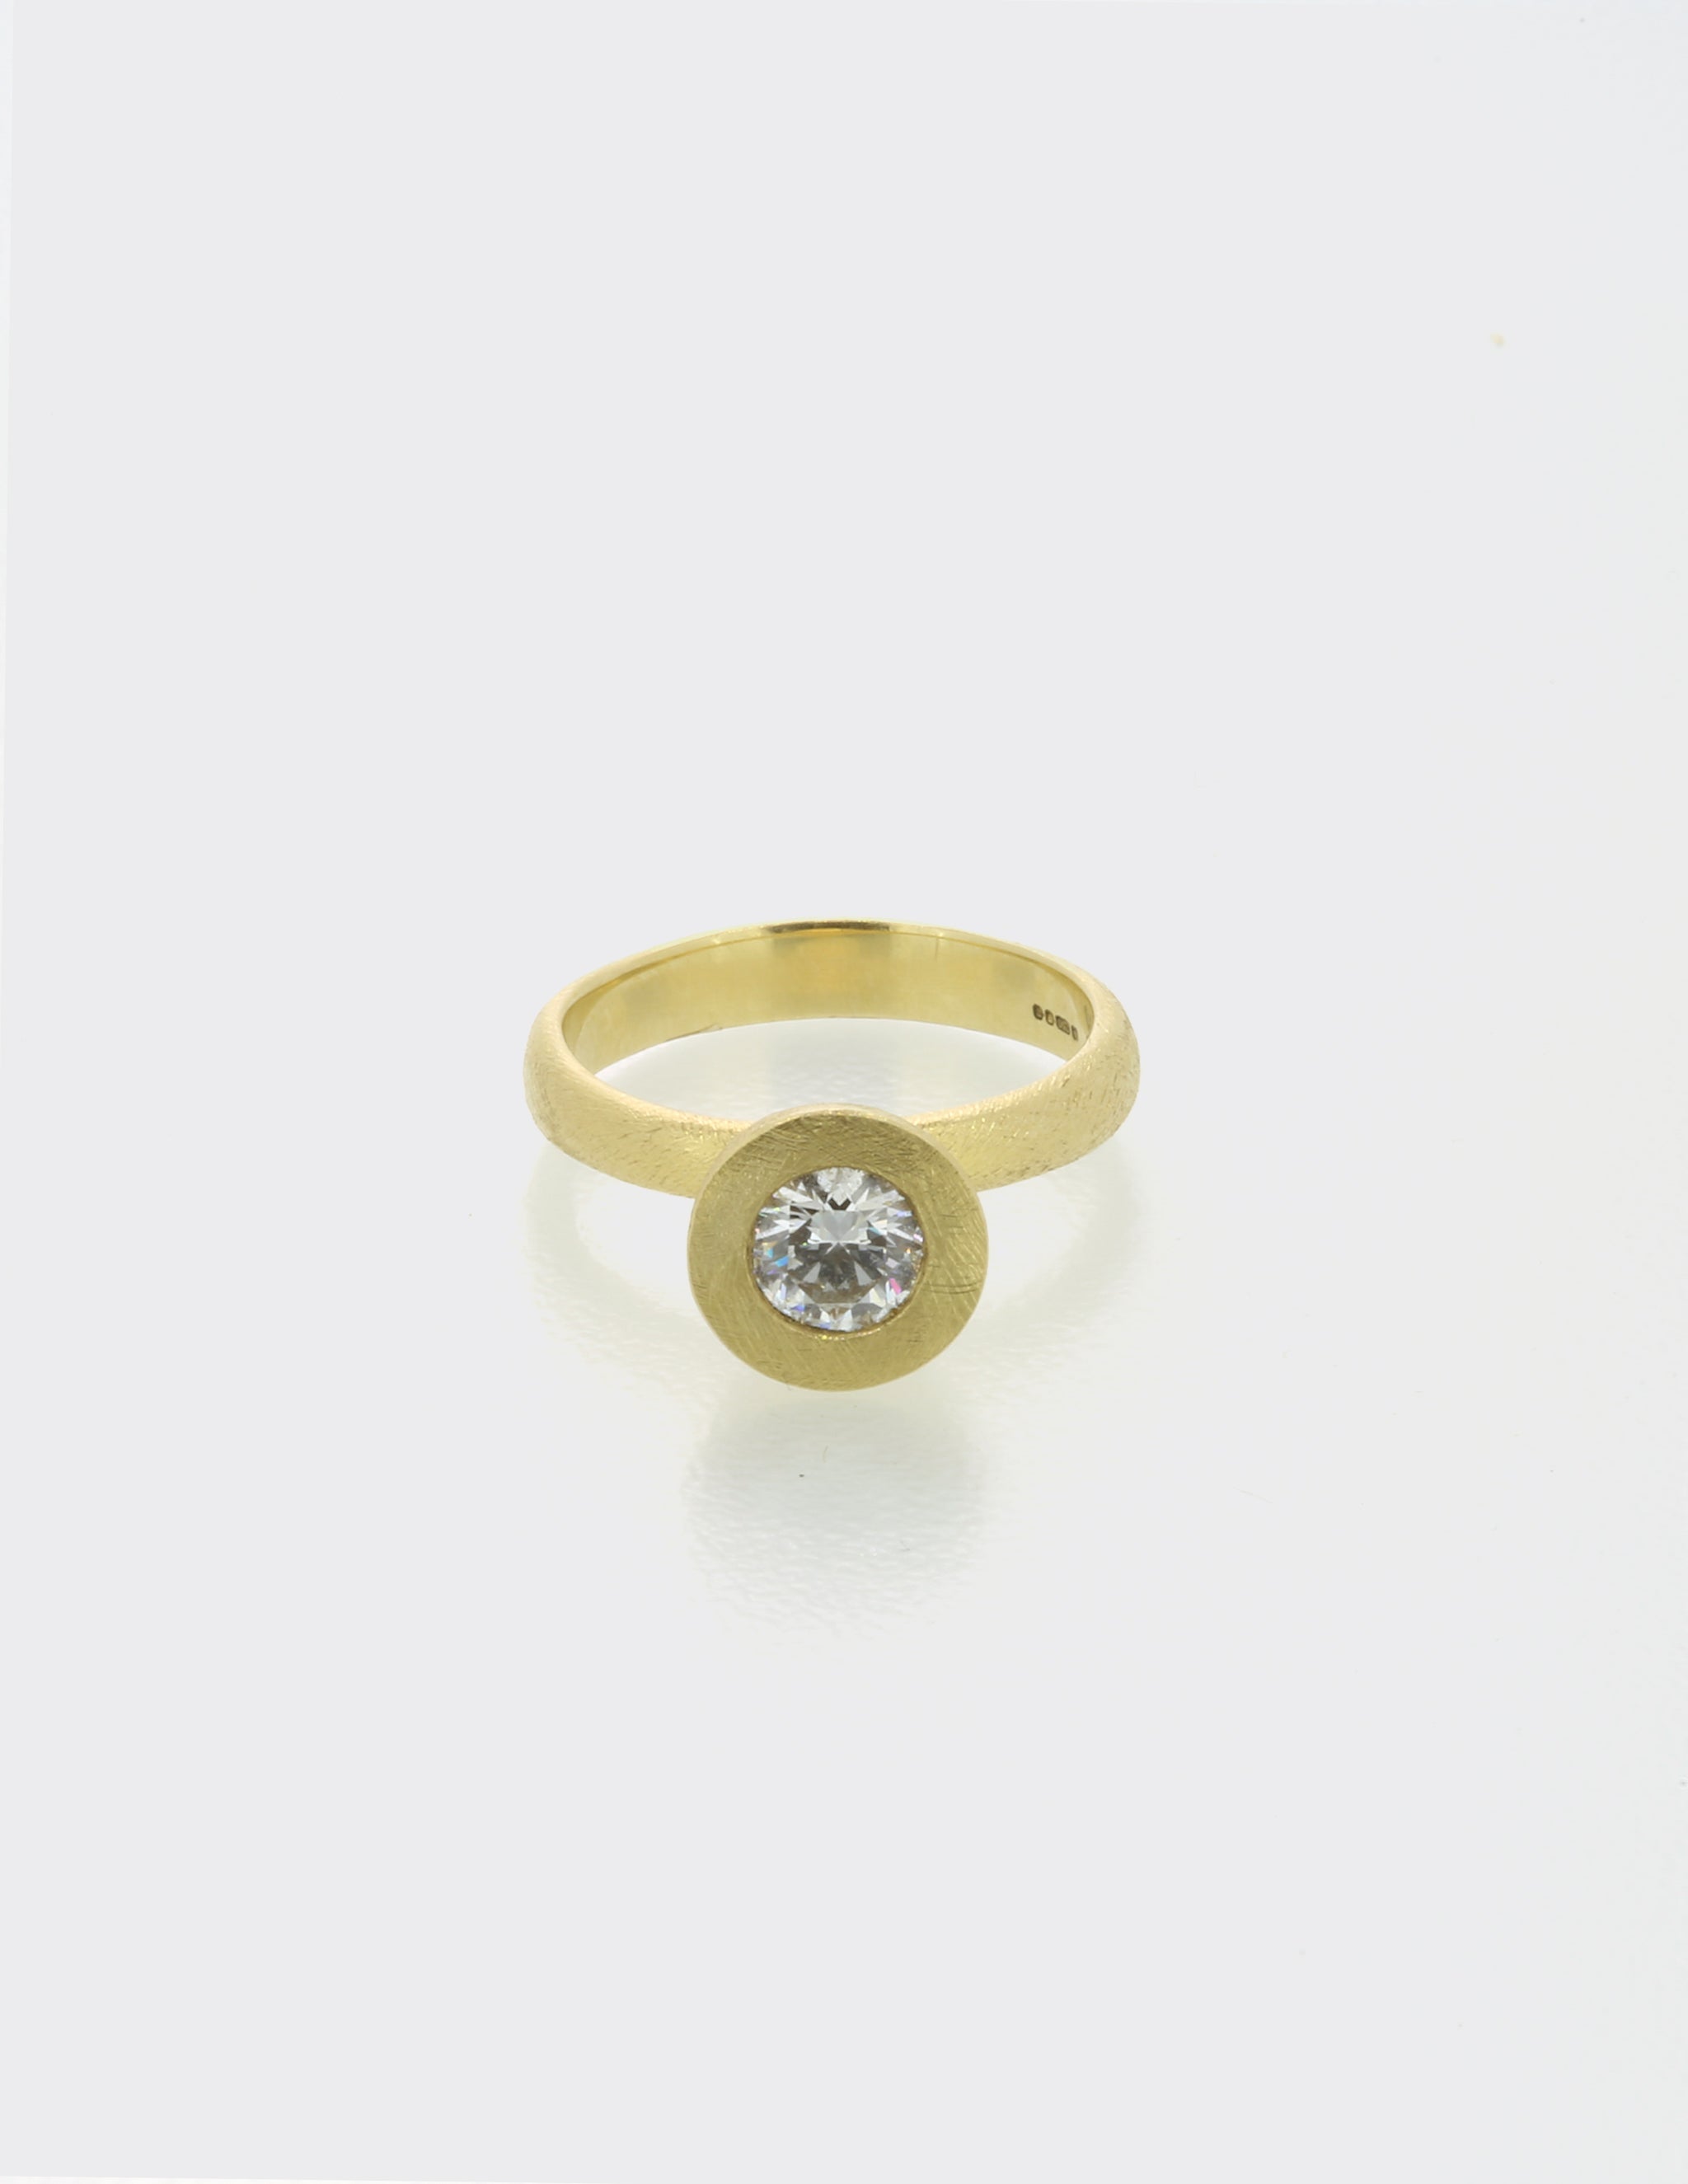 Cone ring with round diamond